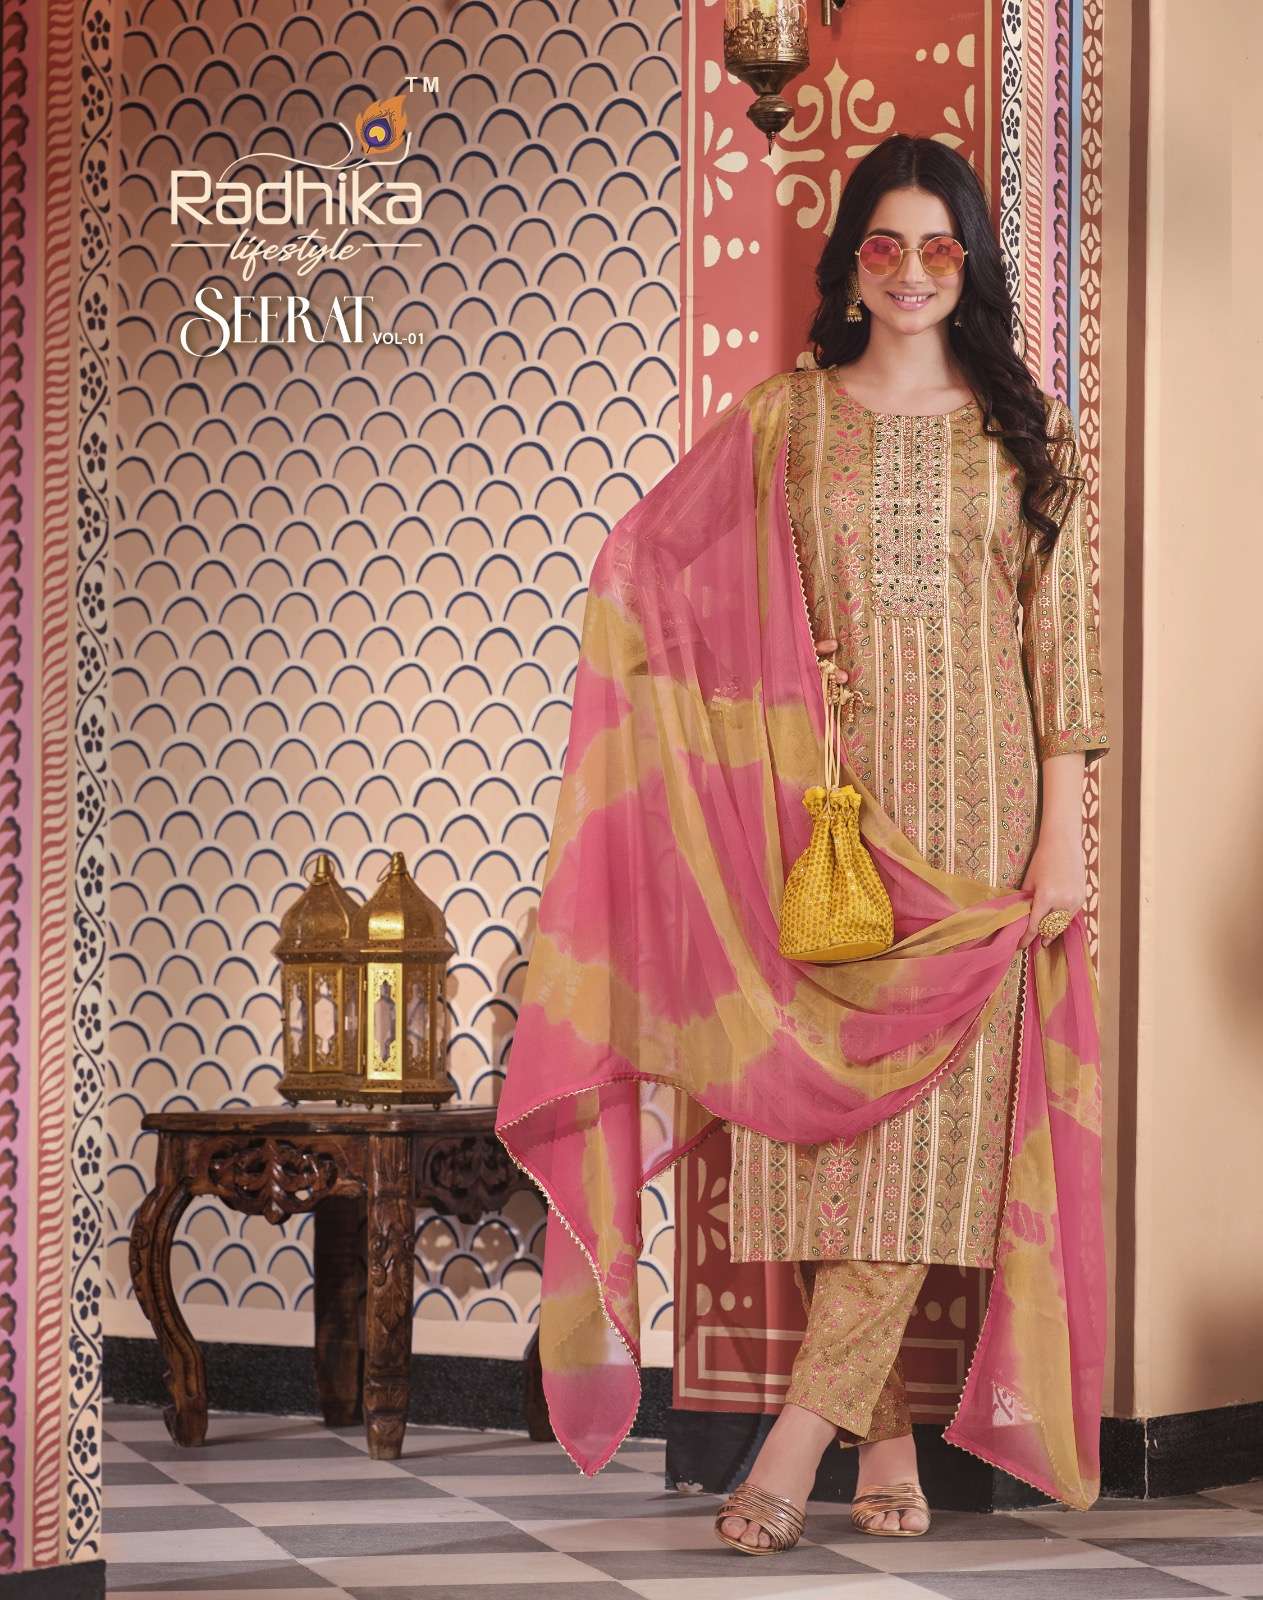 radhika lifestyle seerat vol-1 1001-1008 series rayon designer kurtis catalogue online supplier surat 